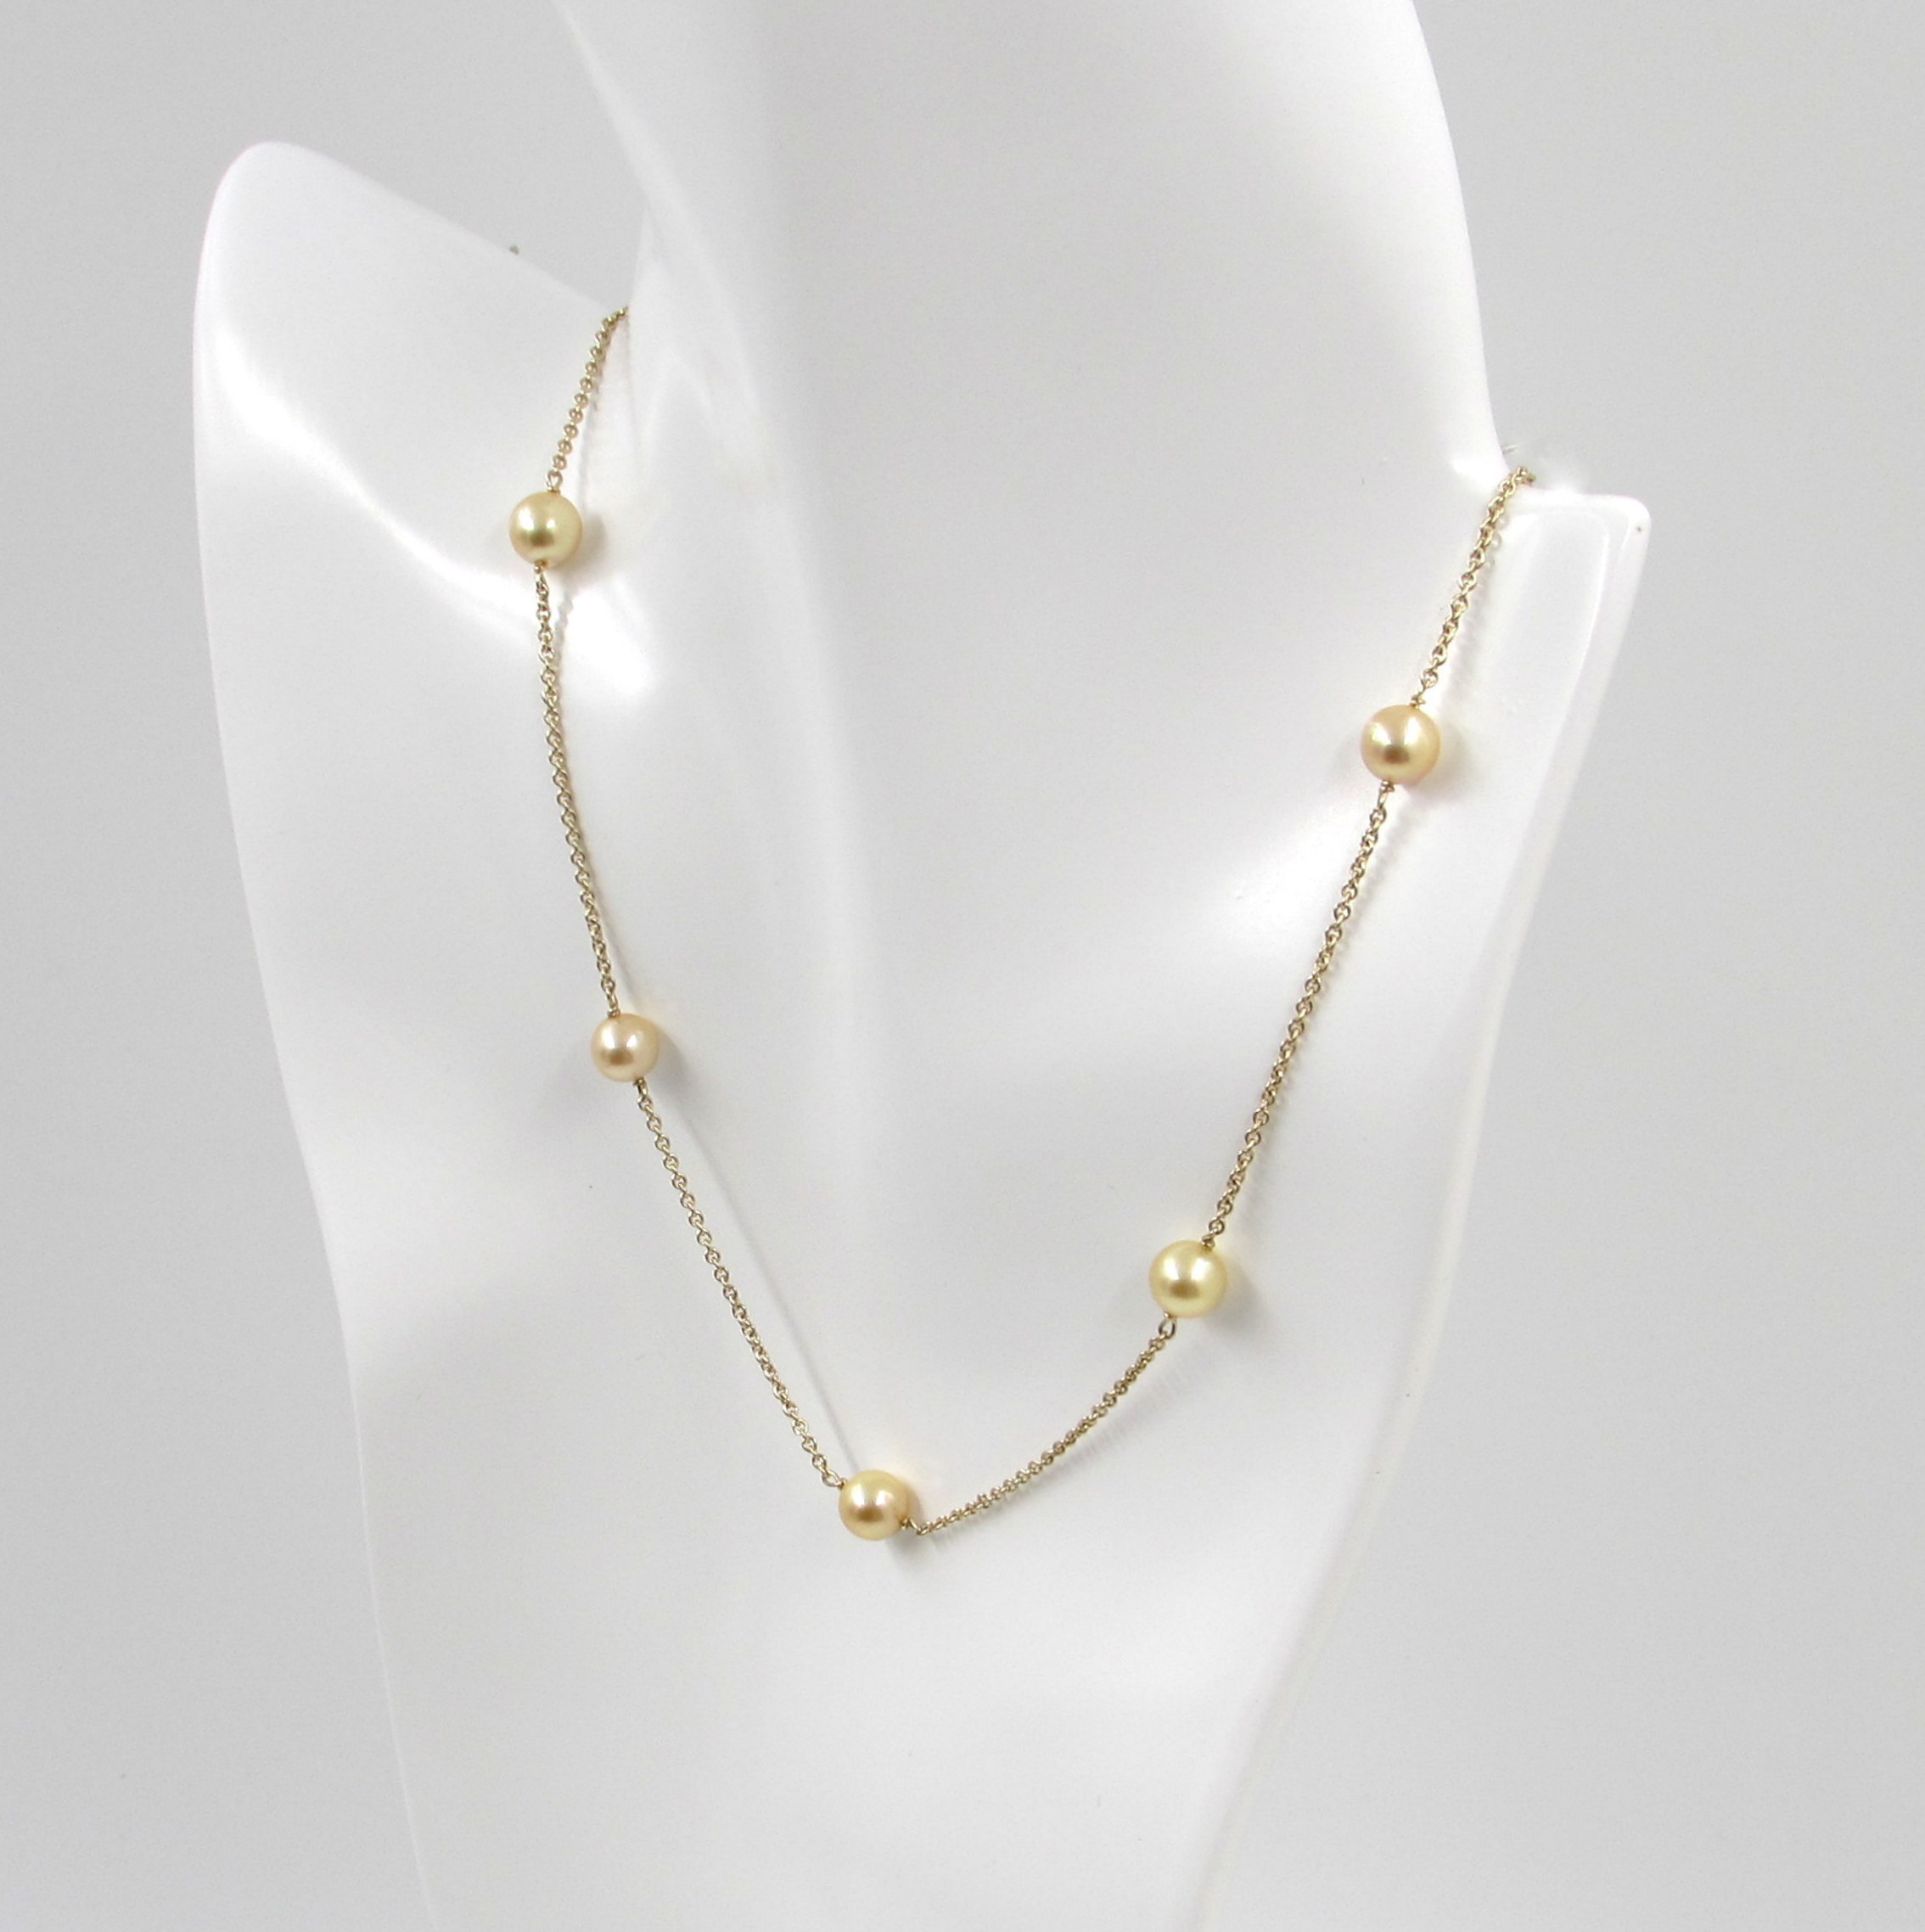 Pearl Necklace Choker Chain Beads Jewellery | eBay